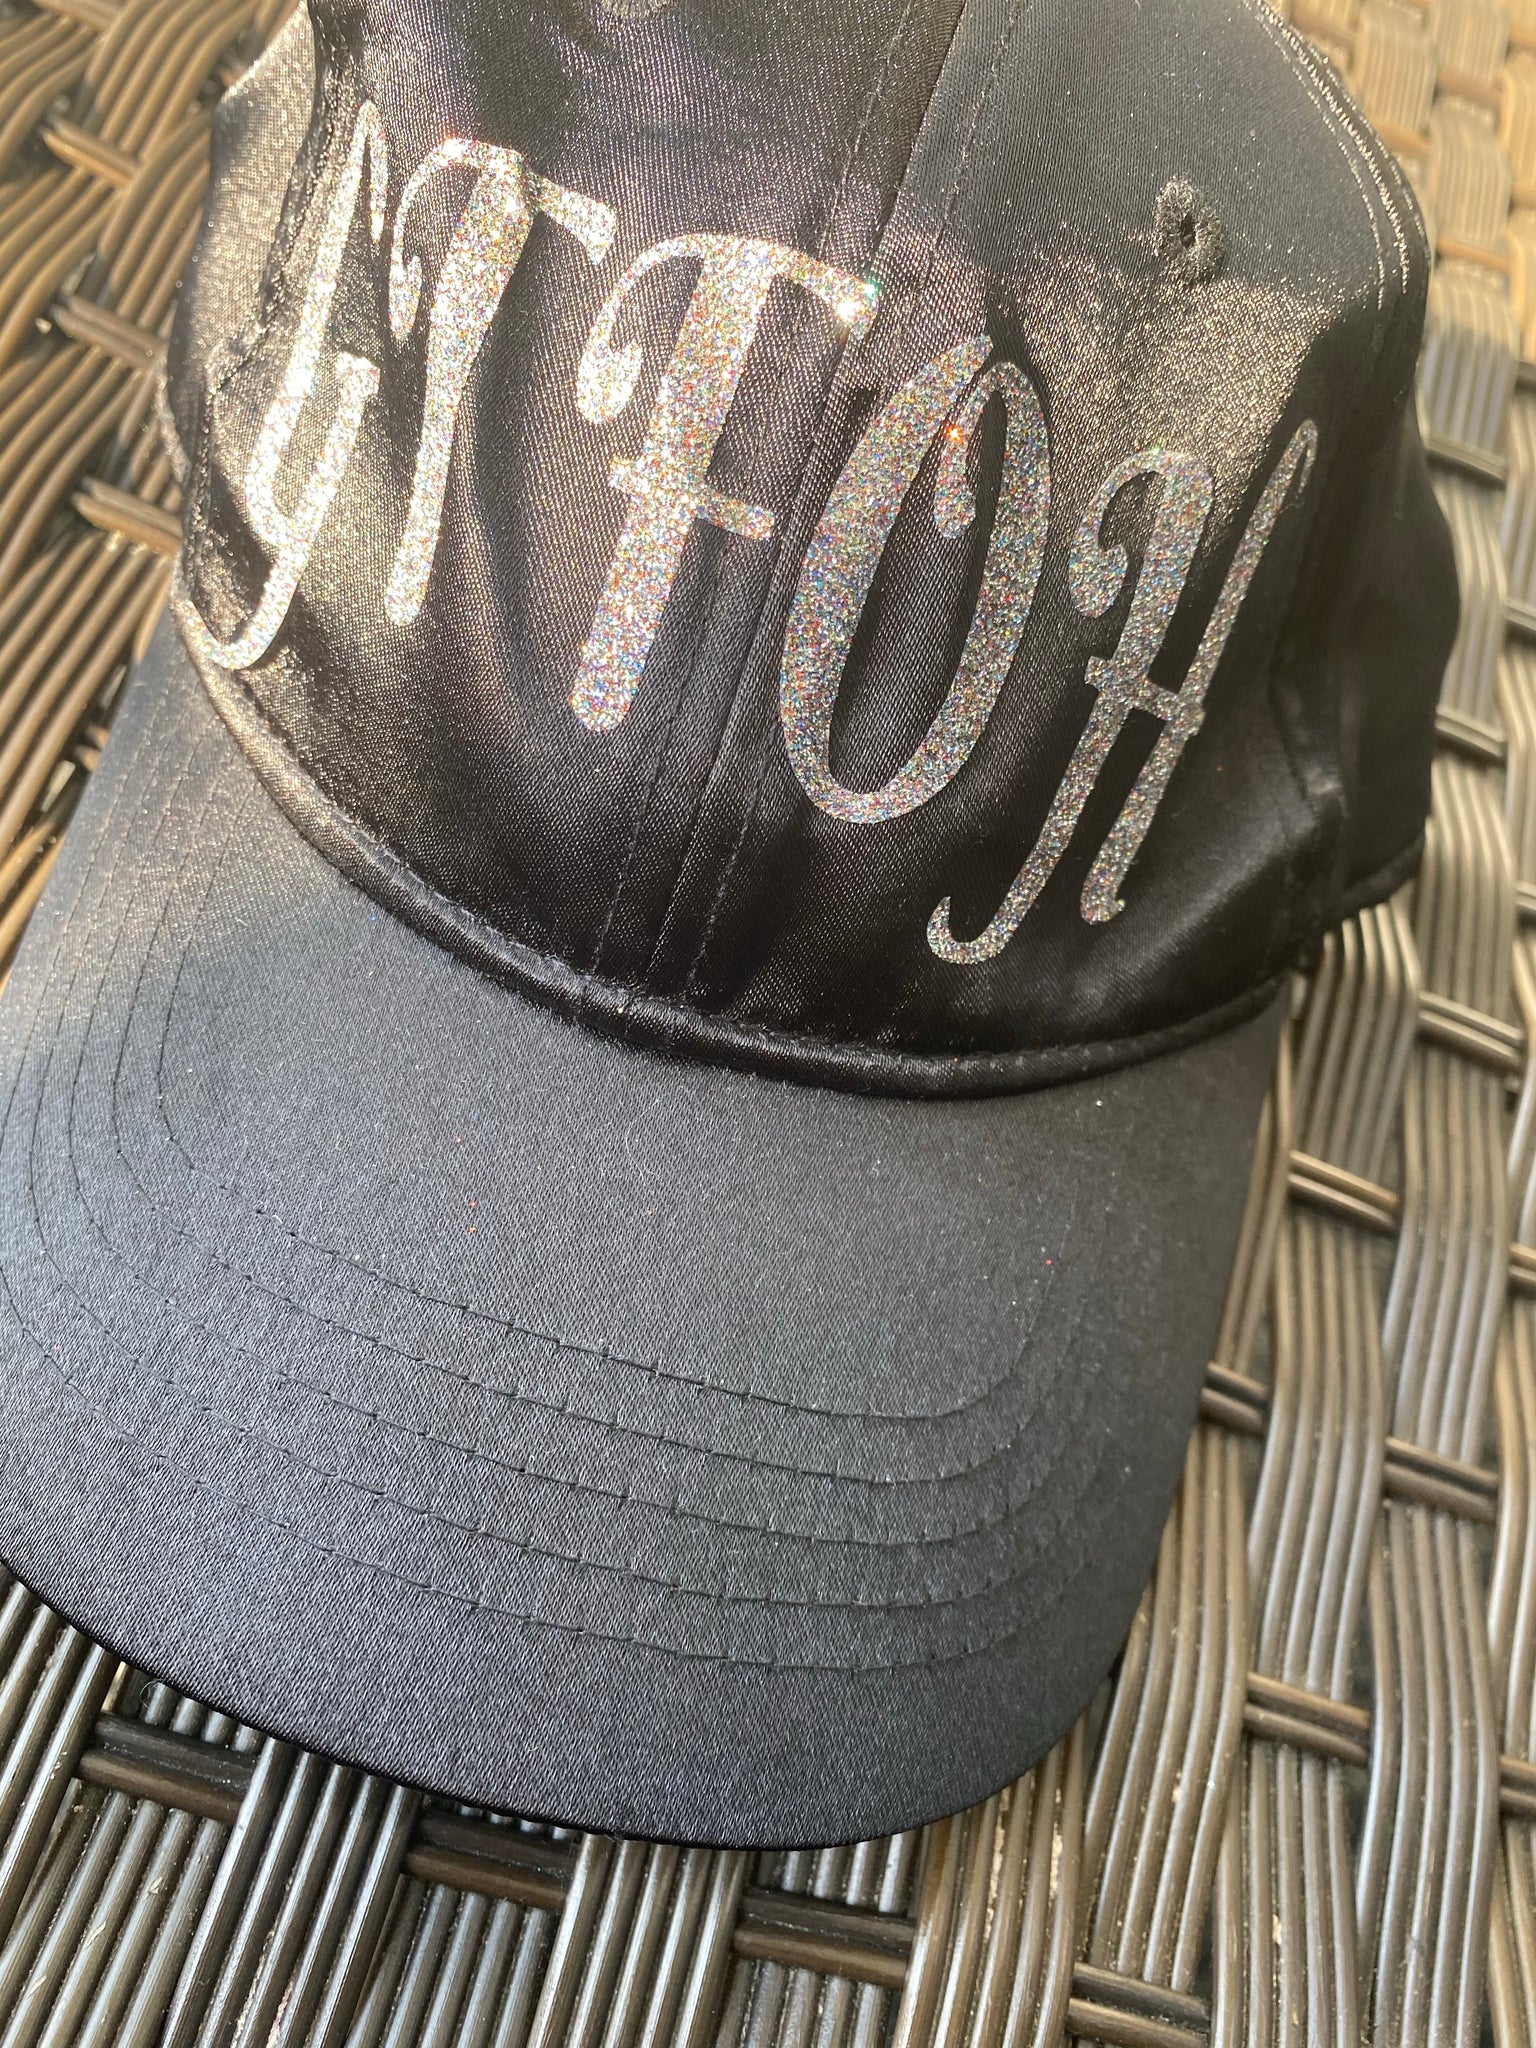 GTFOH hat